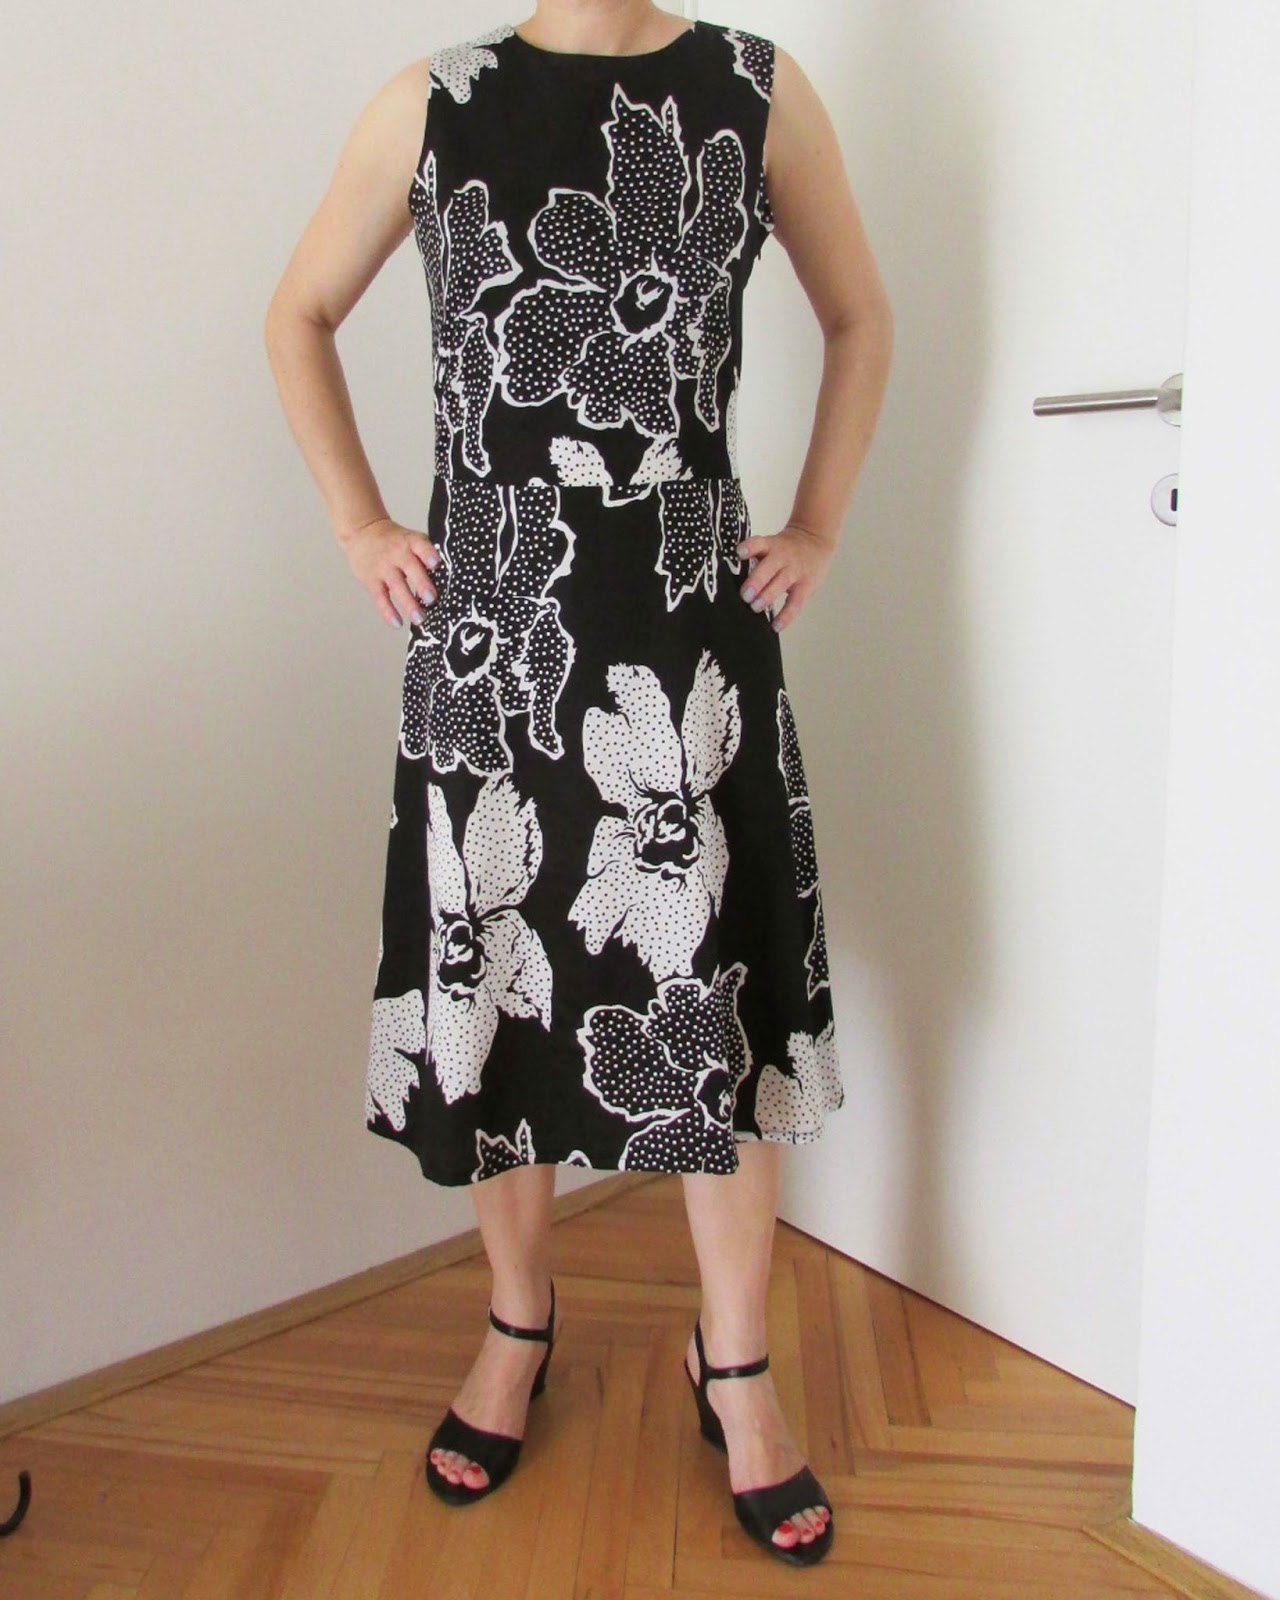 http://ladylinaland.blogspot.com/2014/07/black-and-white-dress.html